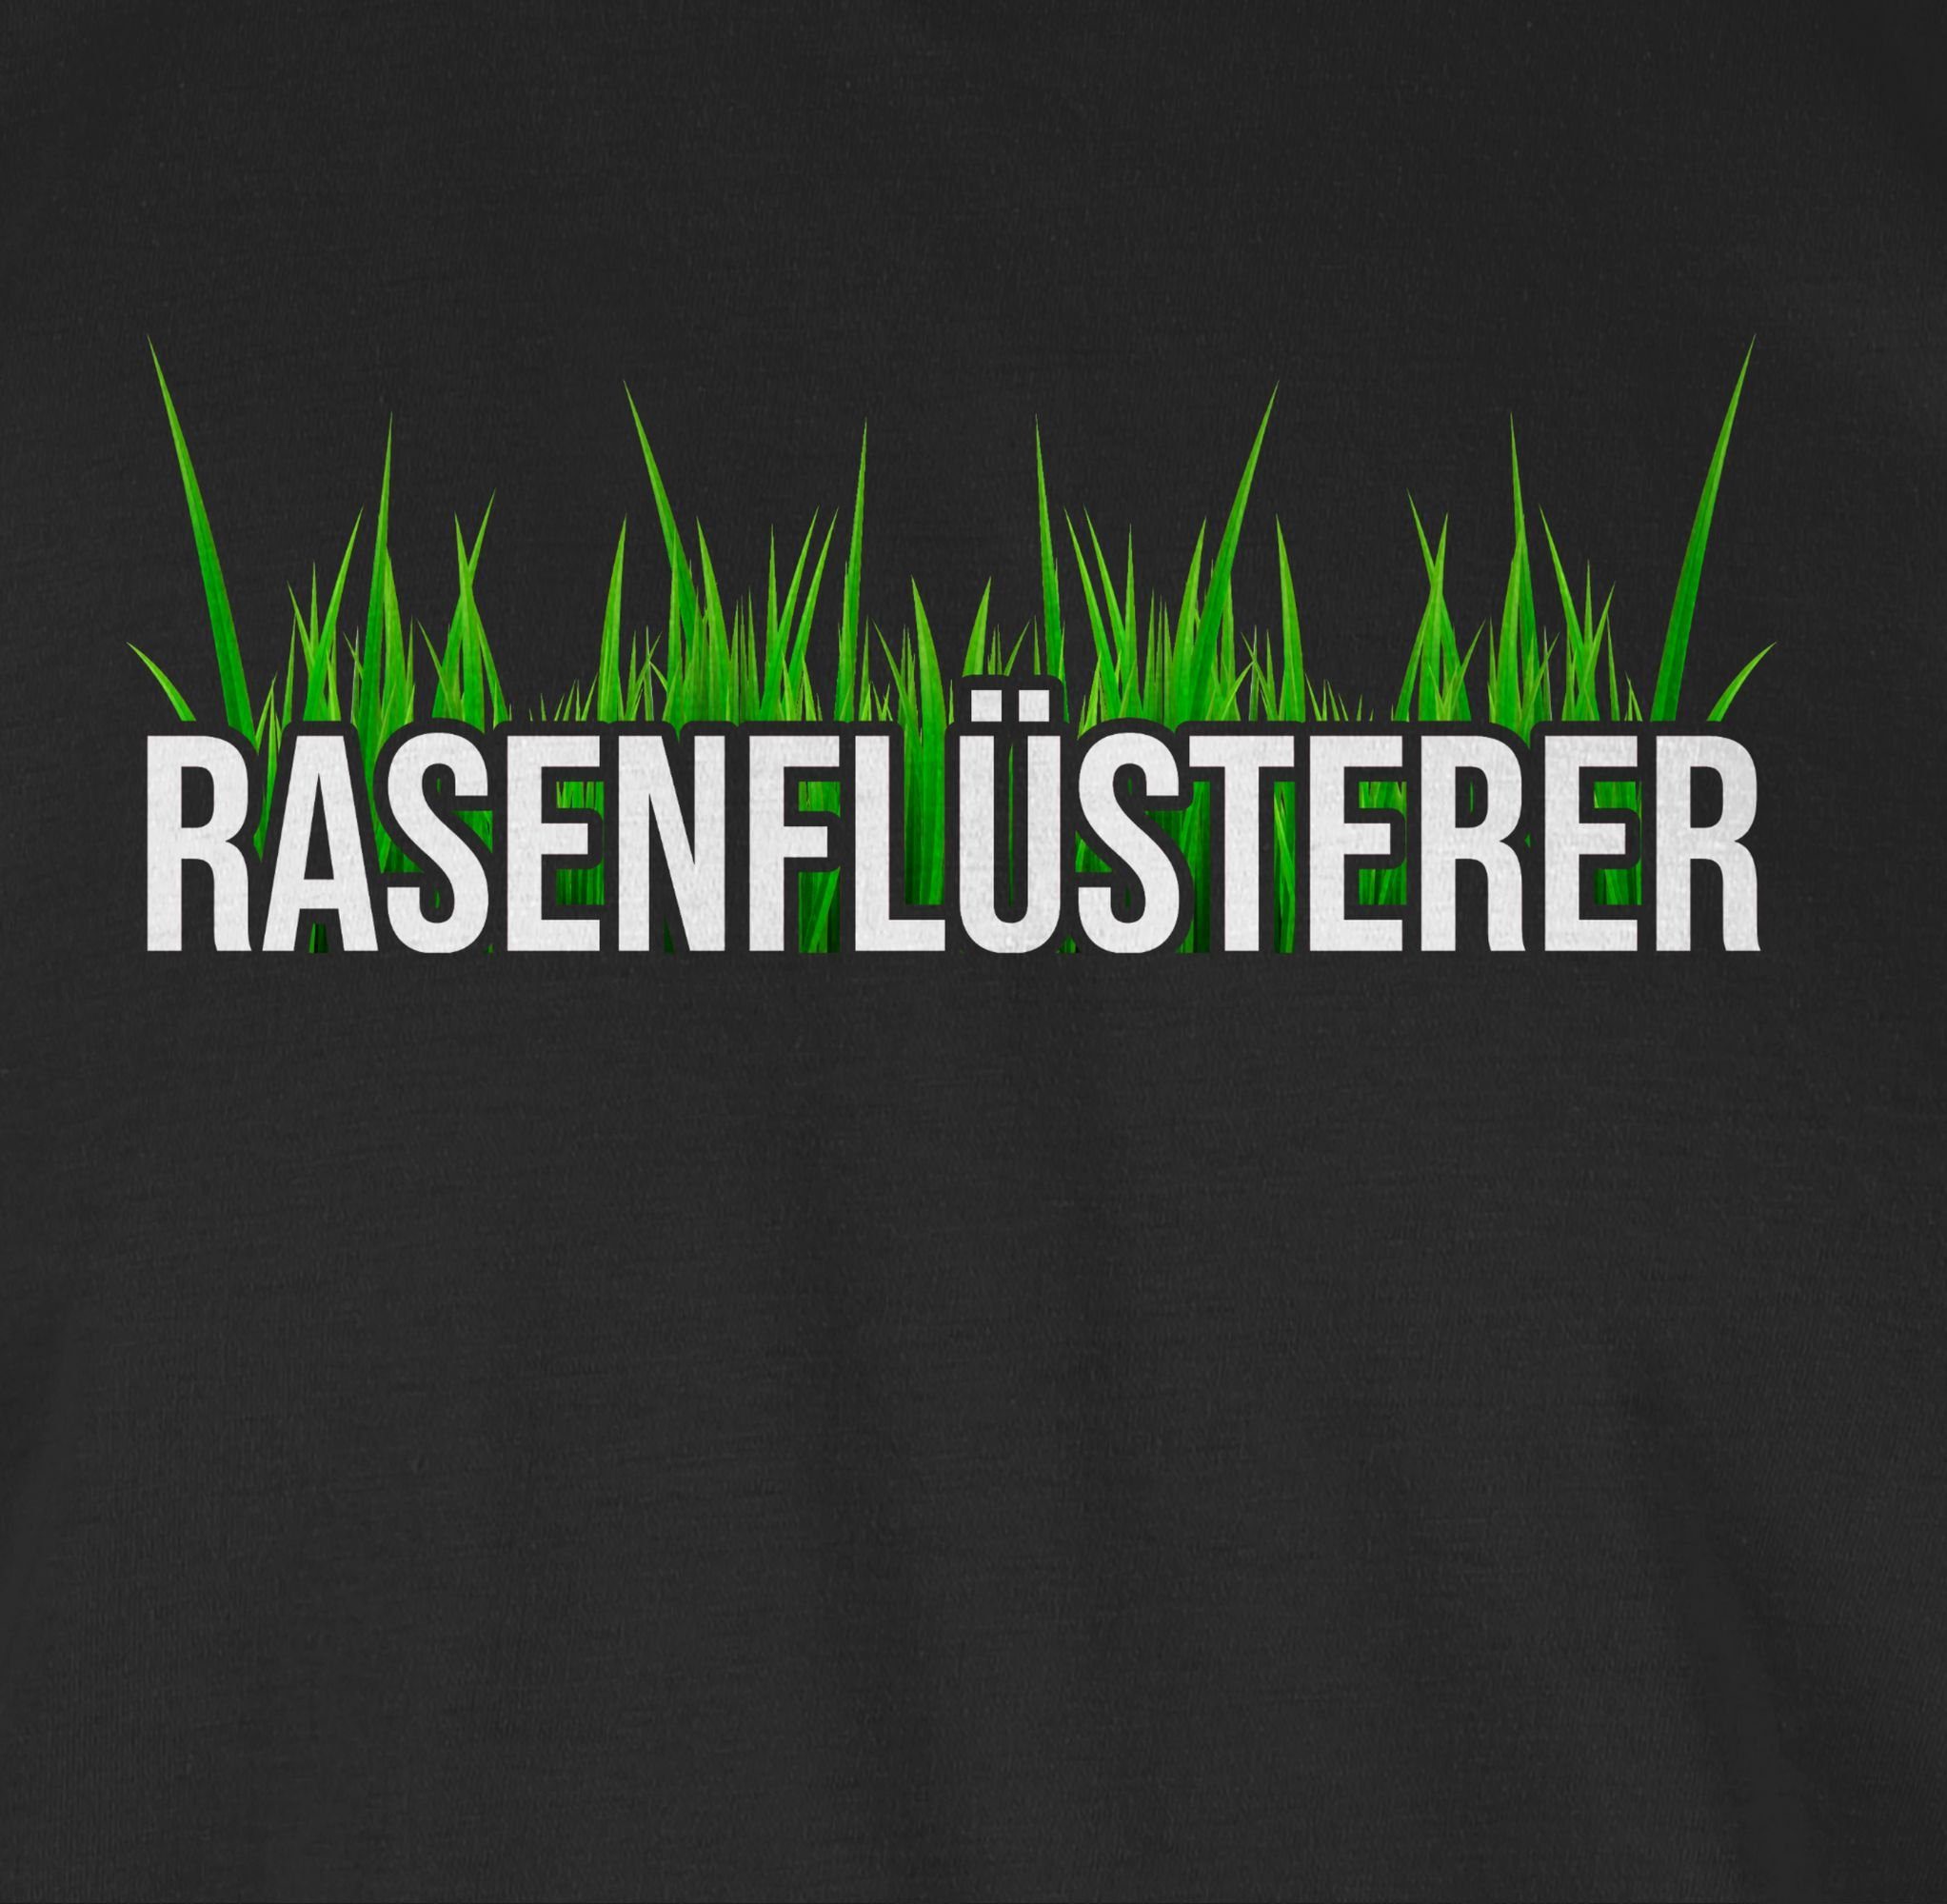 Geschenk Shirtracer Rasenflüsterer Schwarz Hausmeister T-Shirt 03